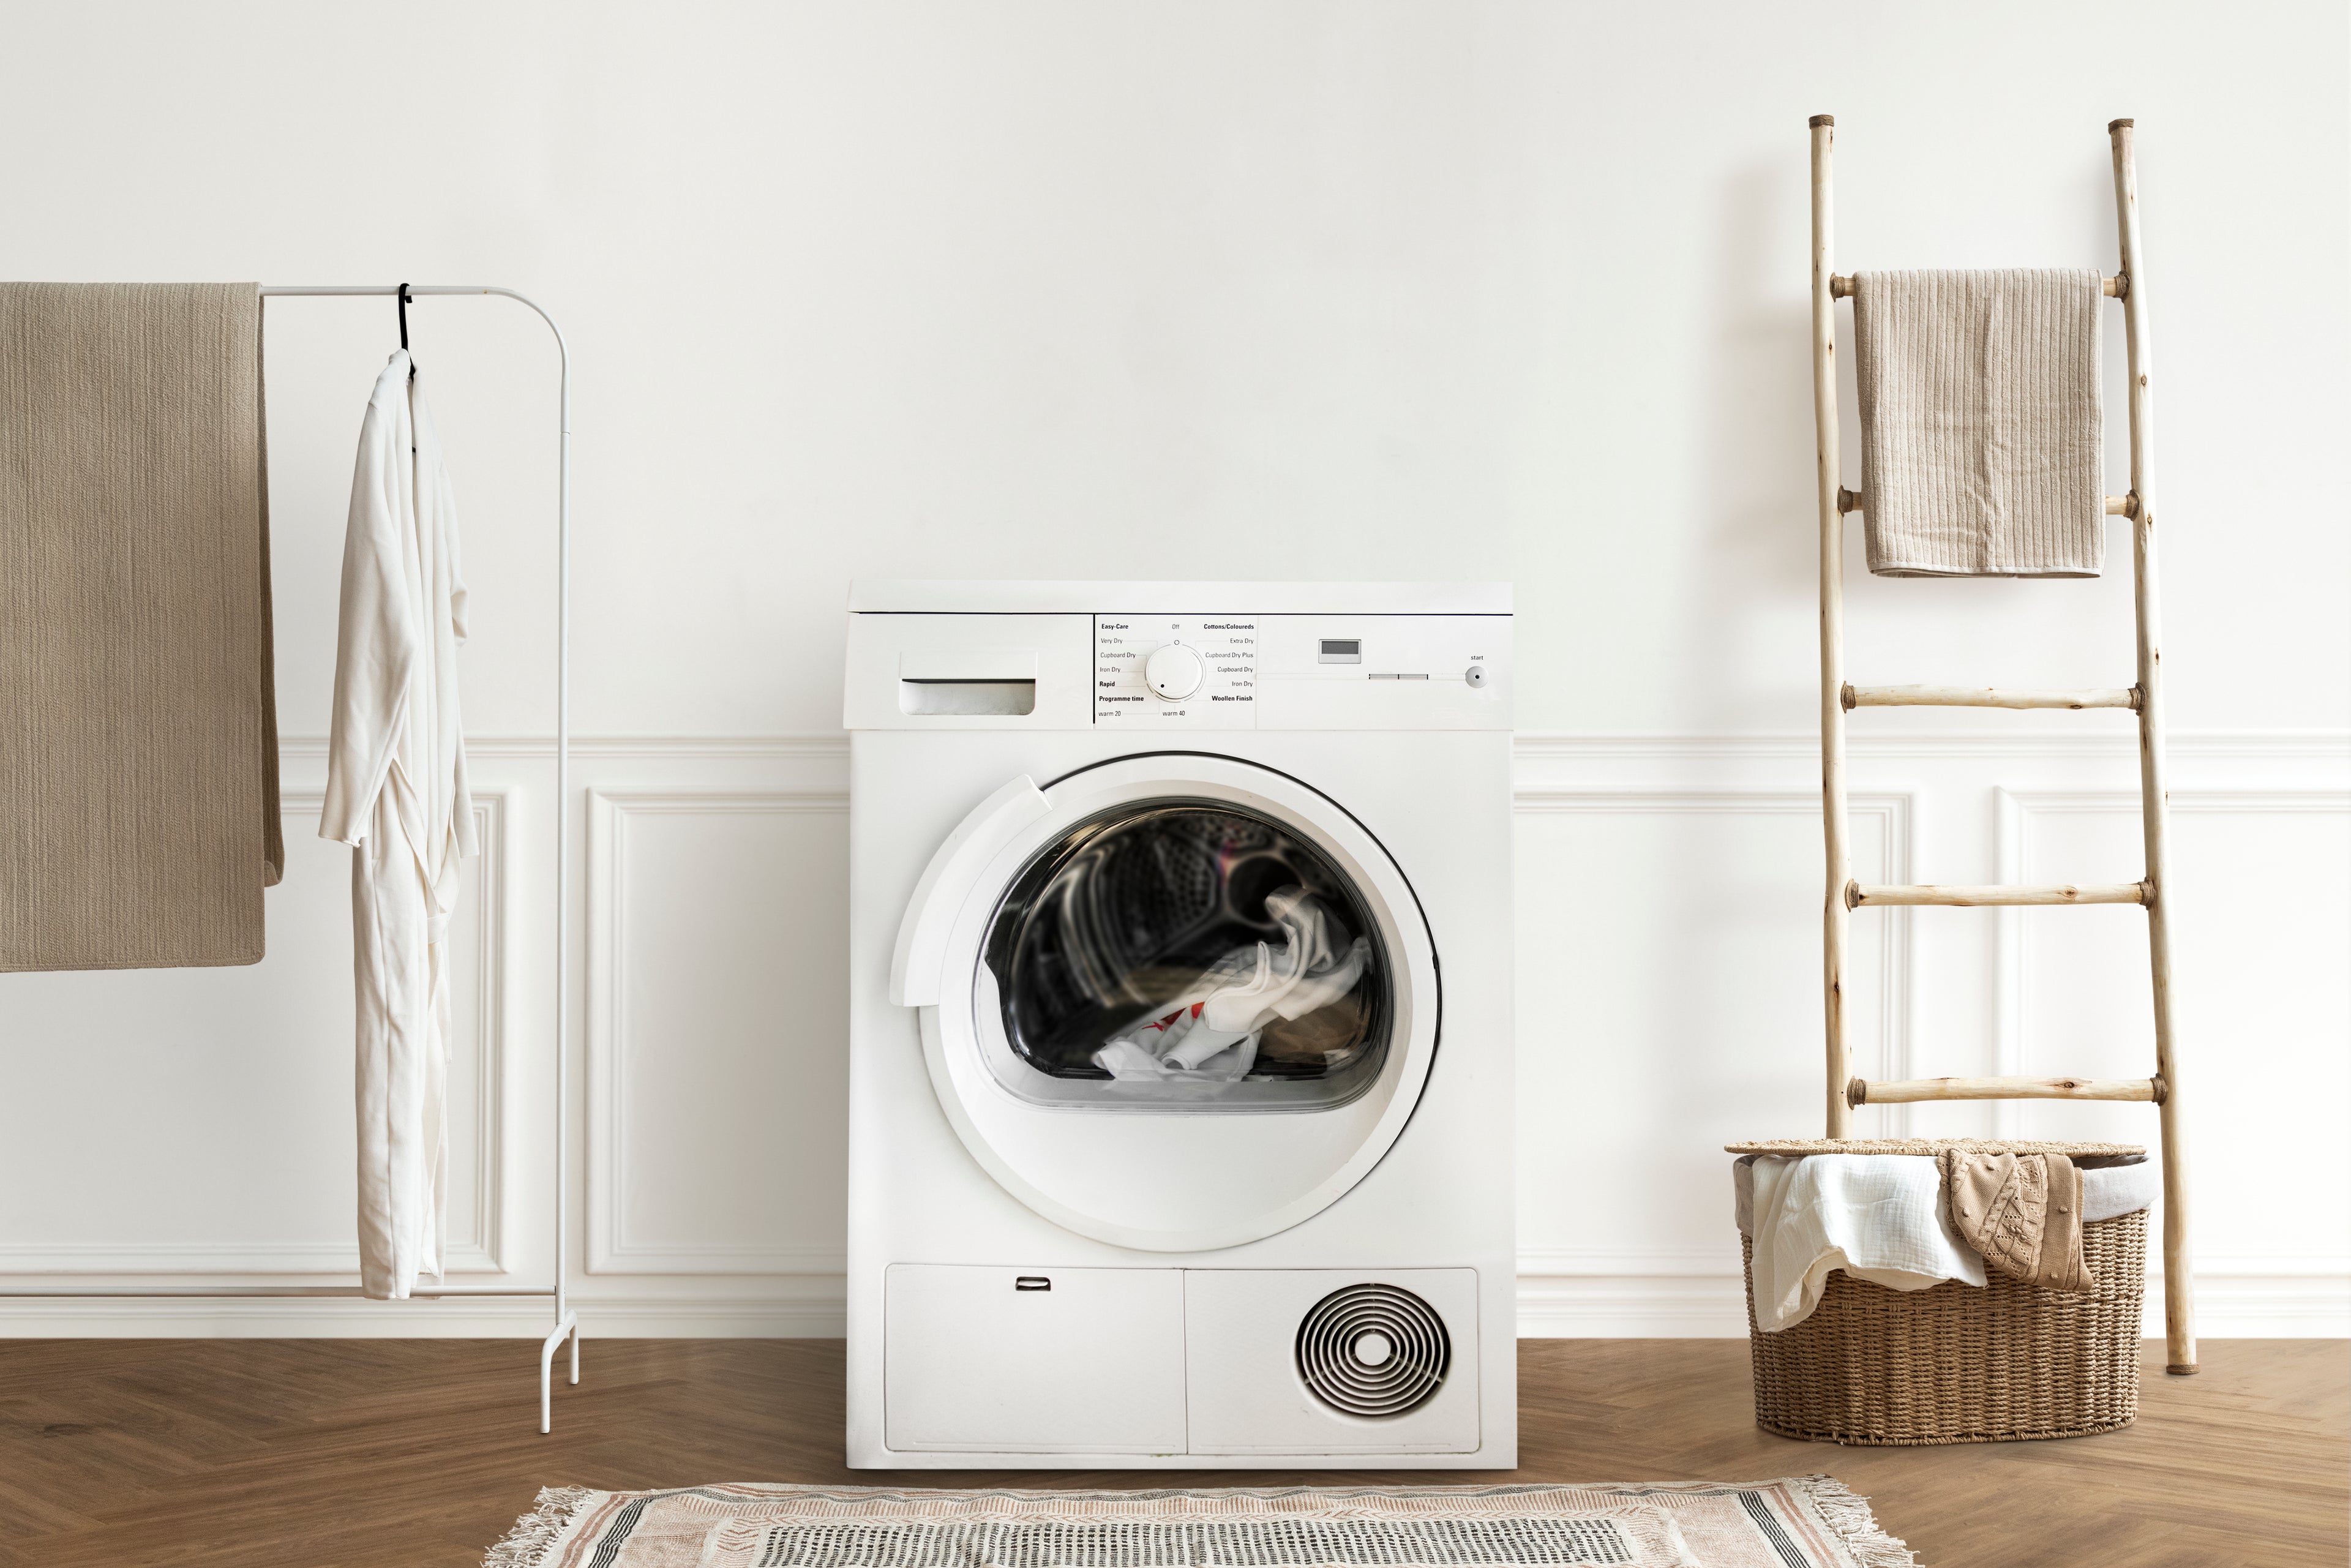 Washing Machines and Washer Dryers